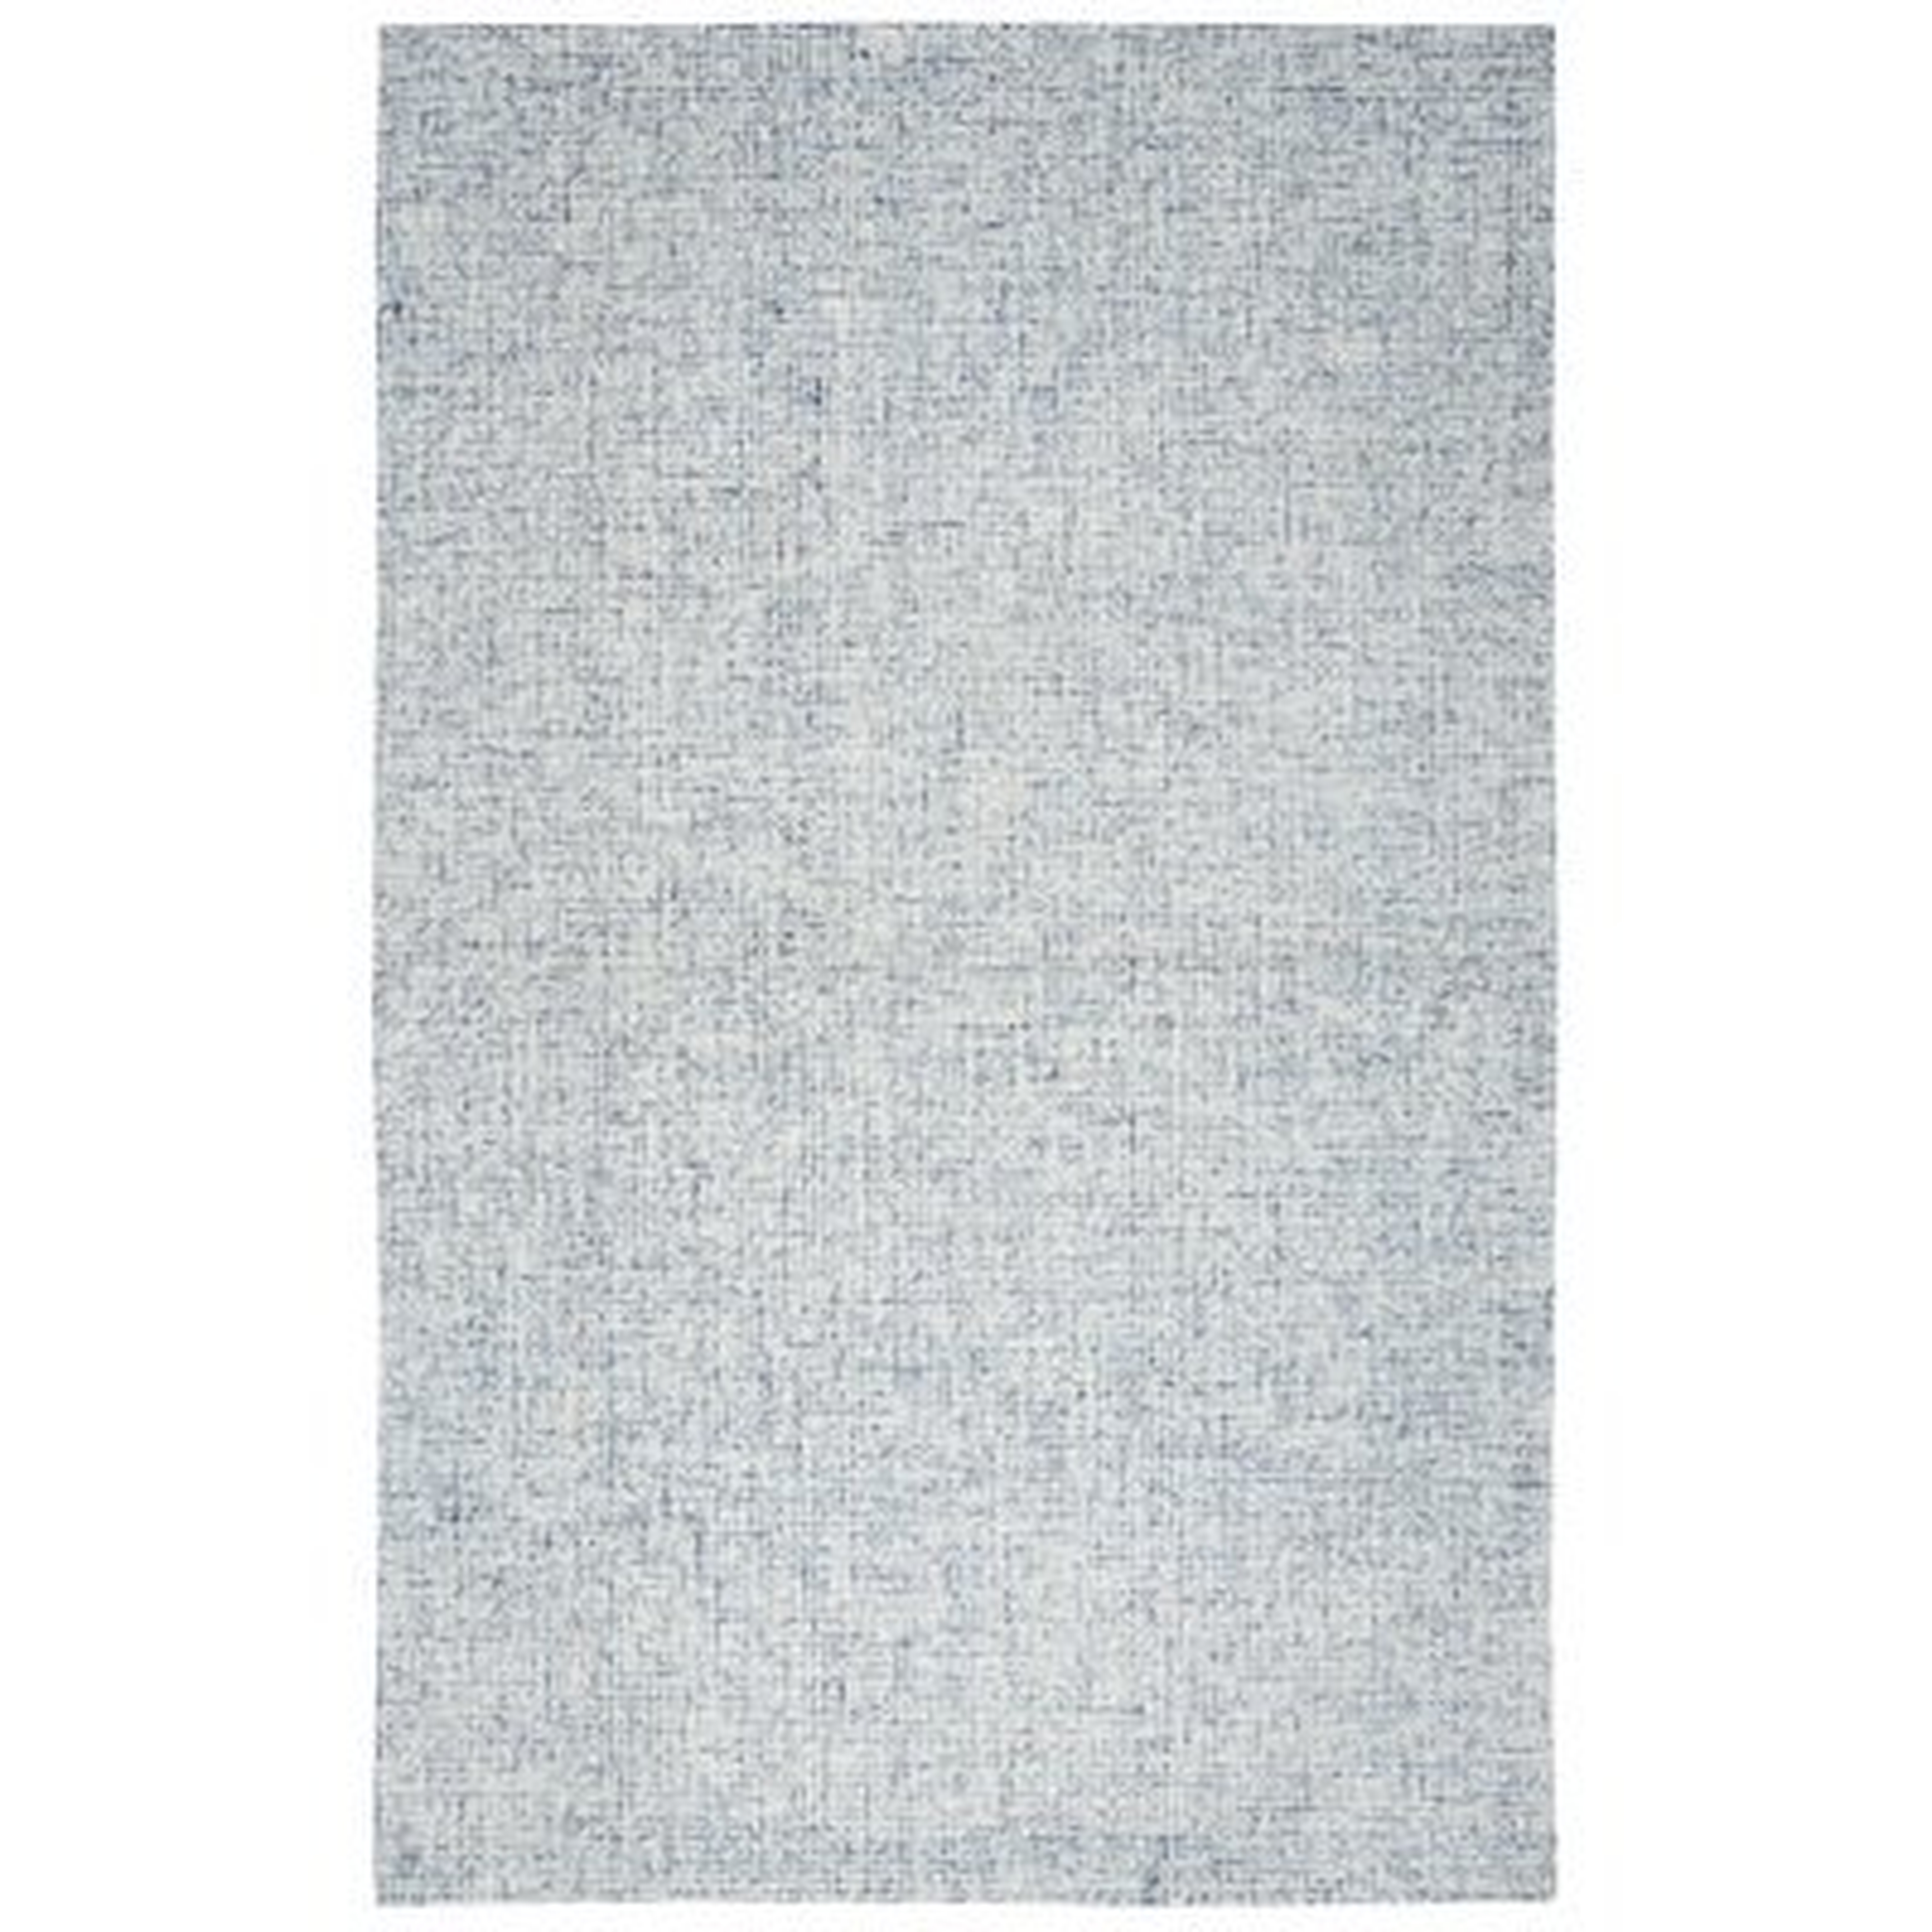 Marsh Hand-Tufted Wool Blue Area Rug, 9' x 12' - Wayfair